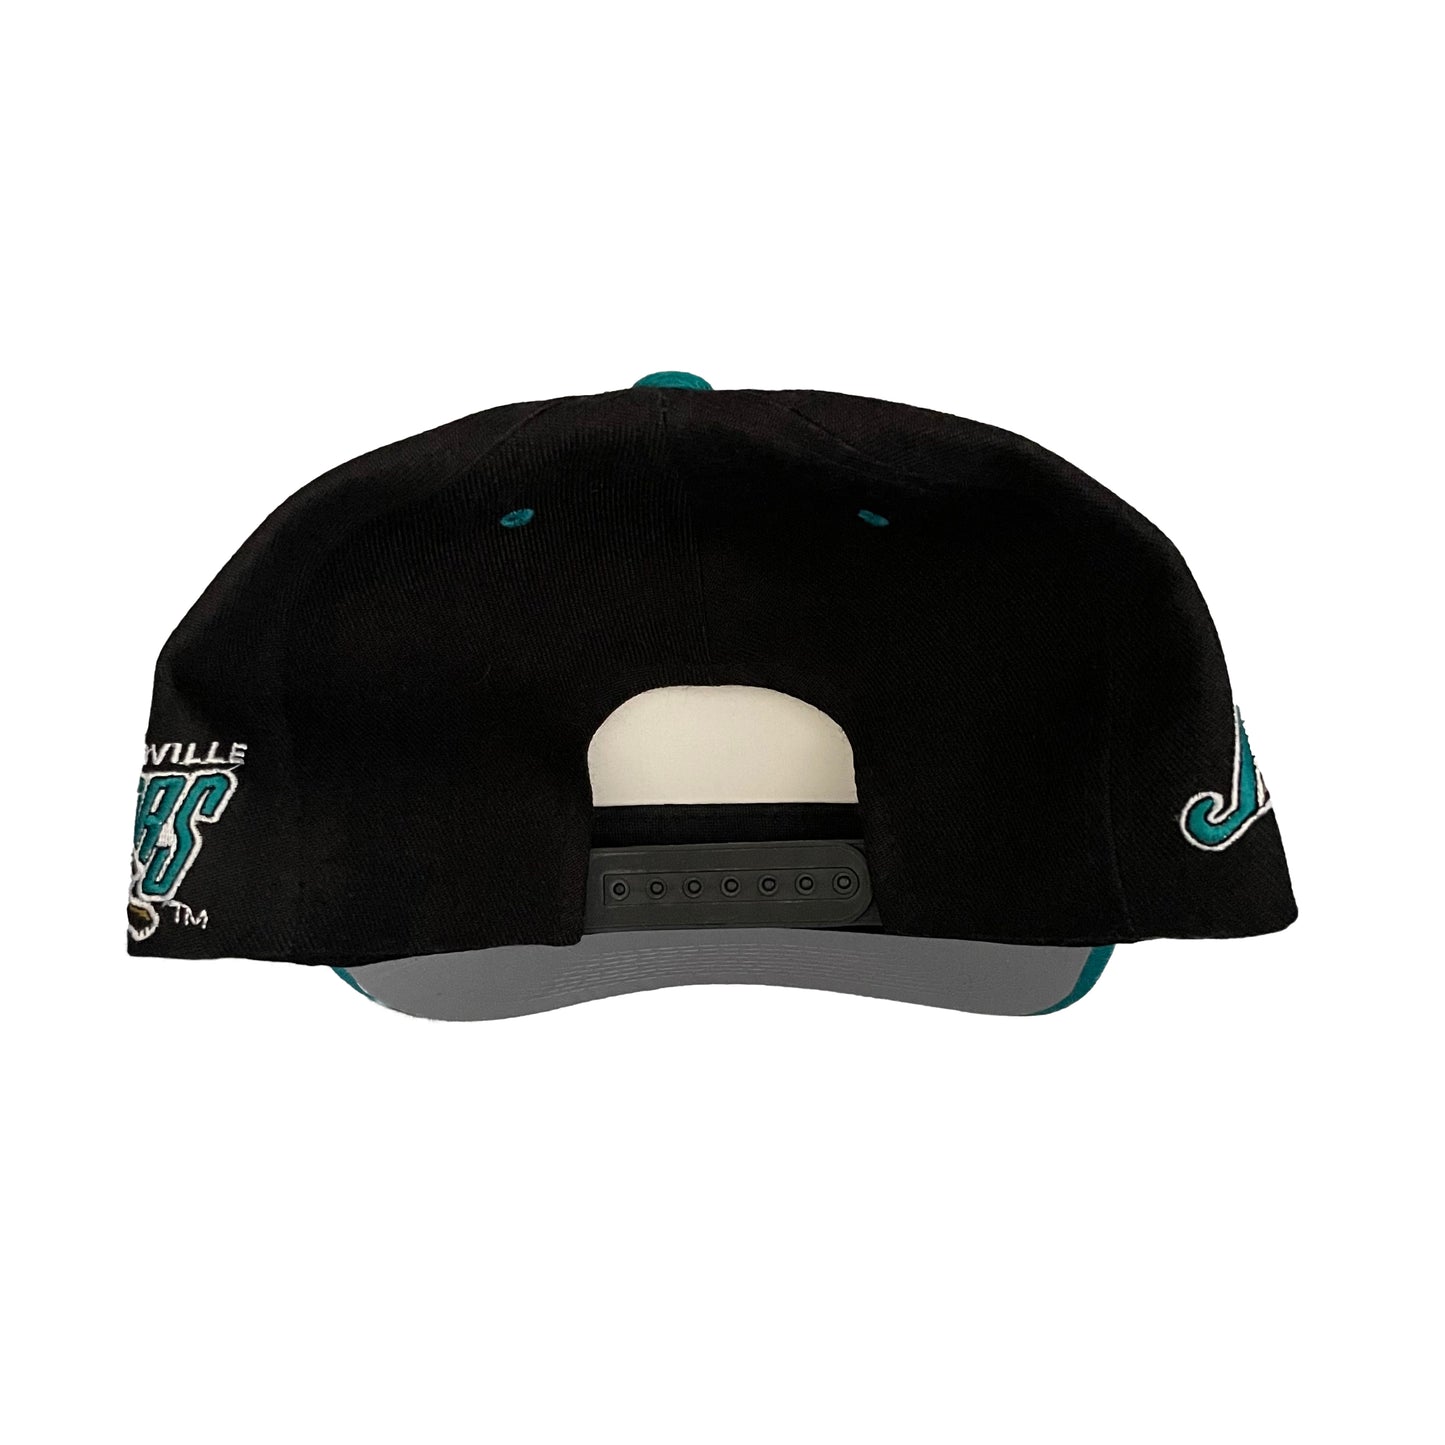 Jacksonville Jaguars DREW PEARSON hat (RARE)